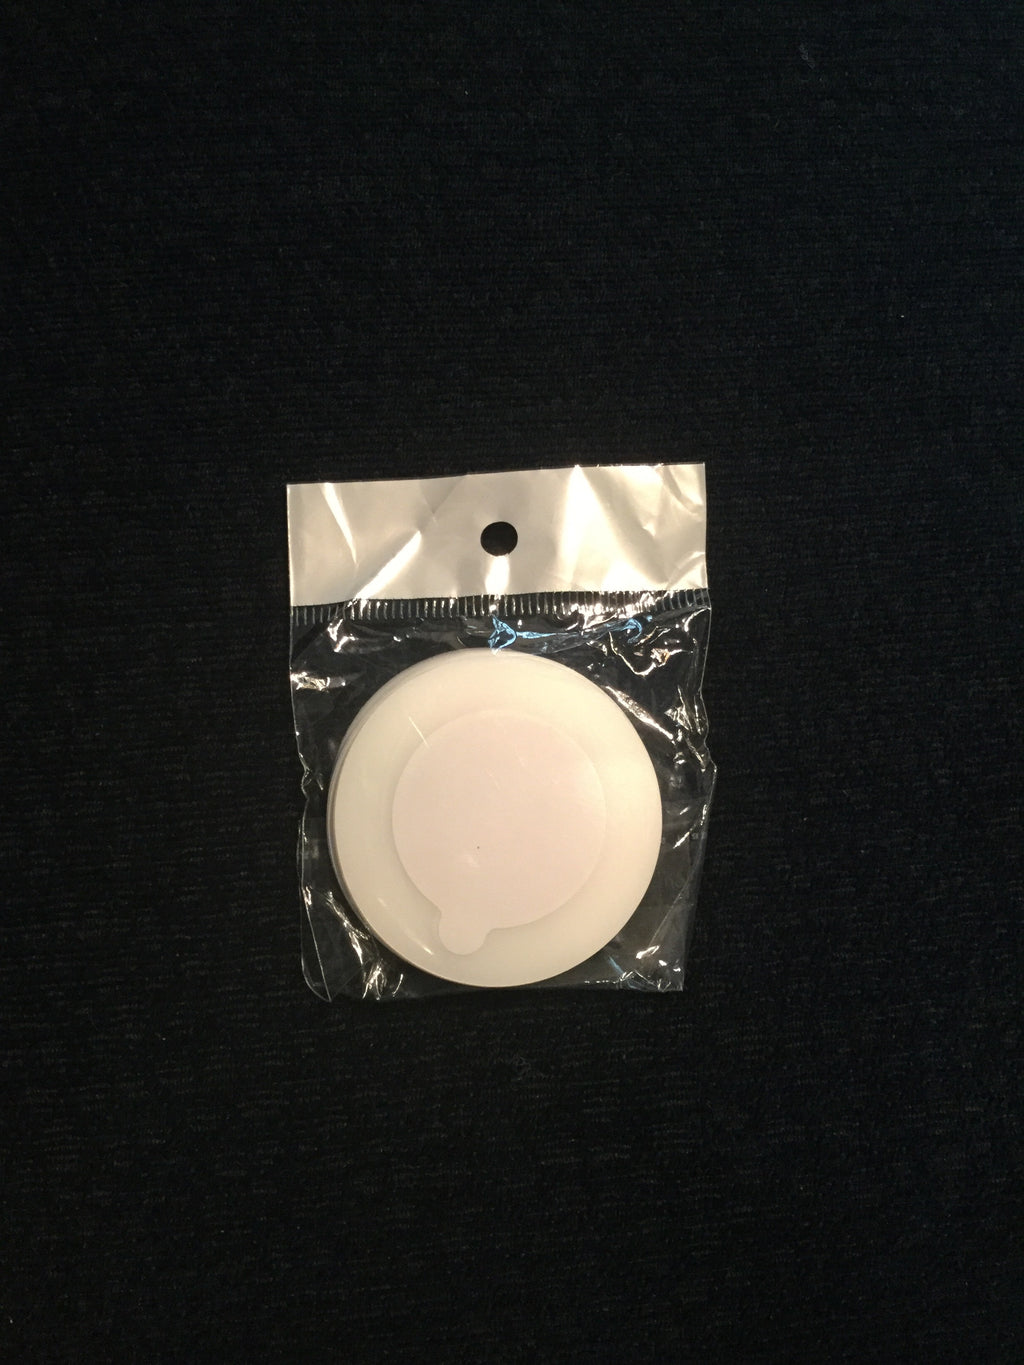 Glue sticker with plastic base